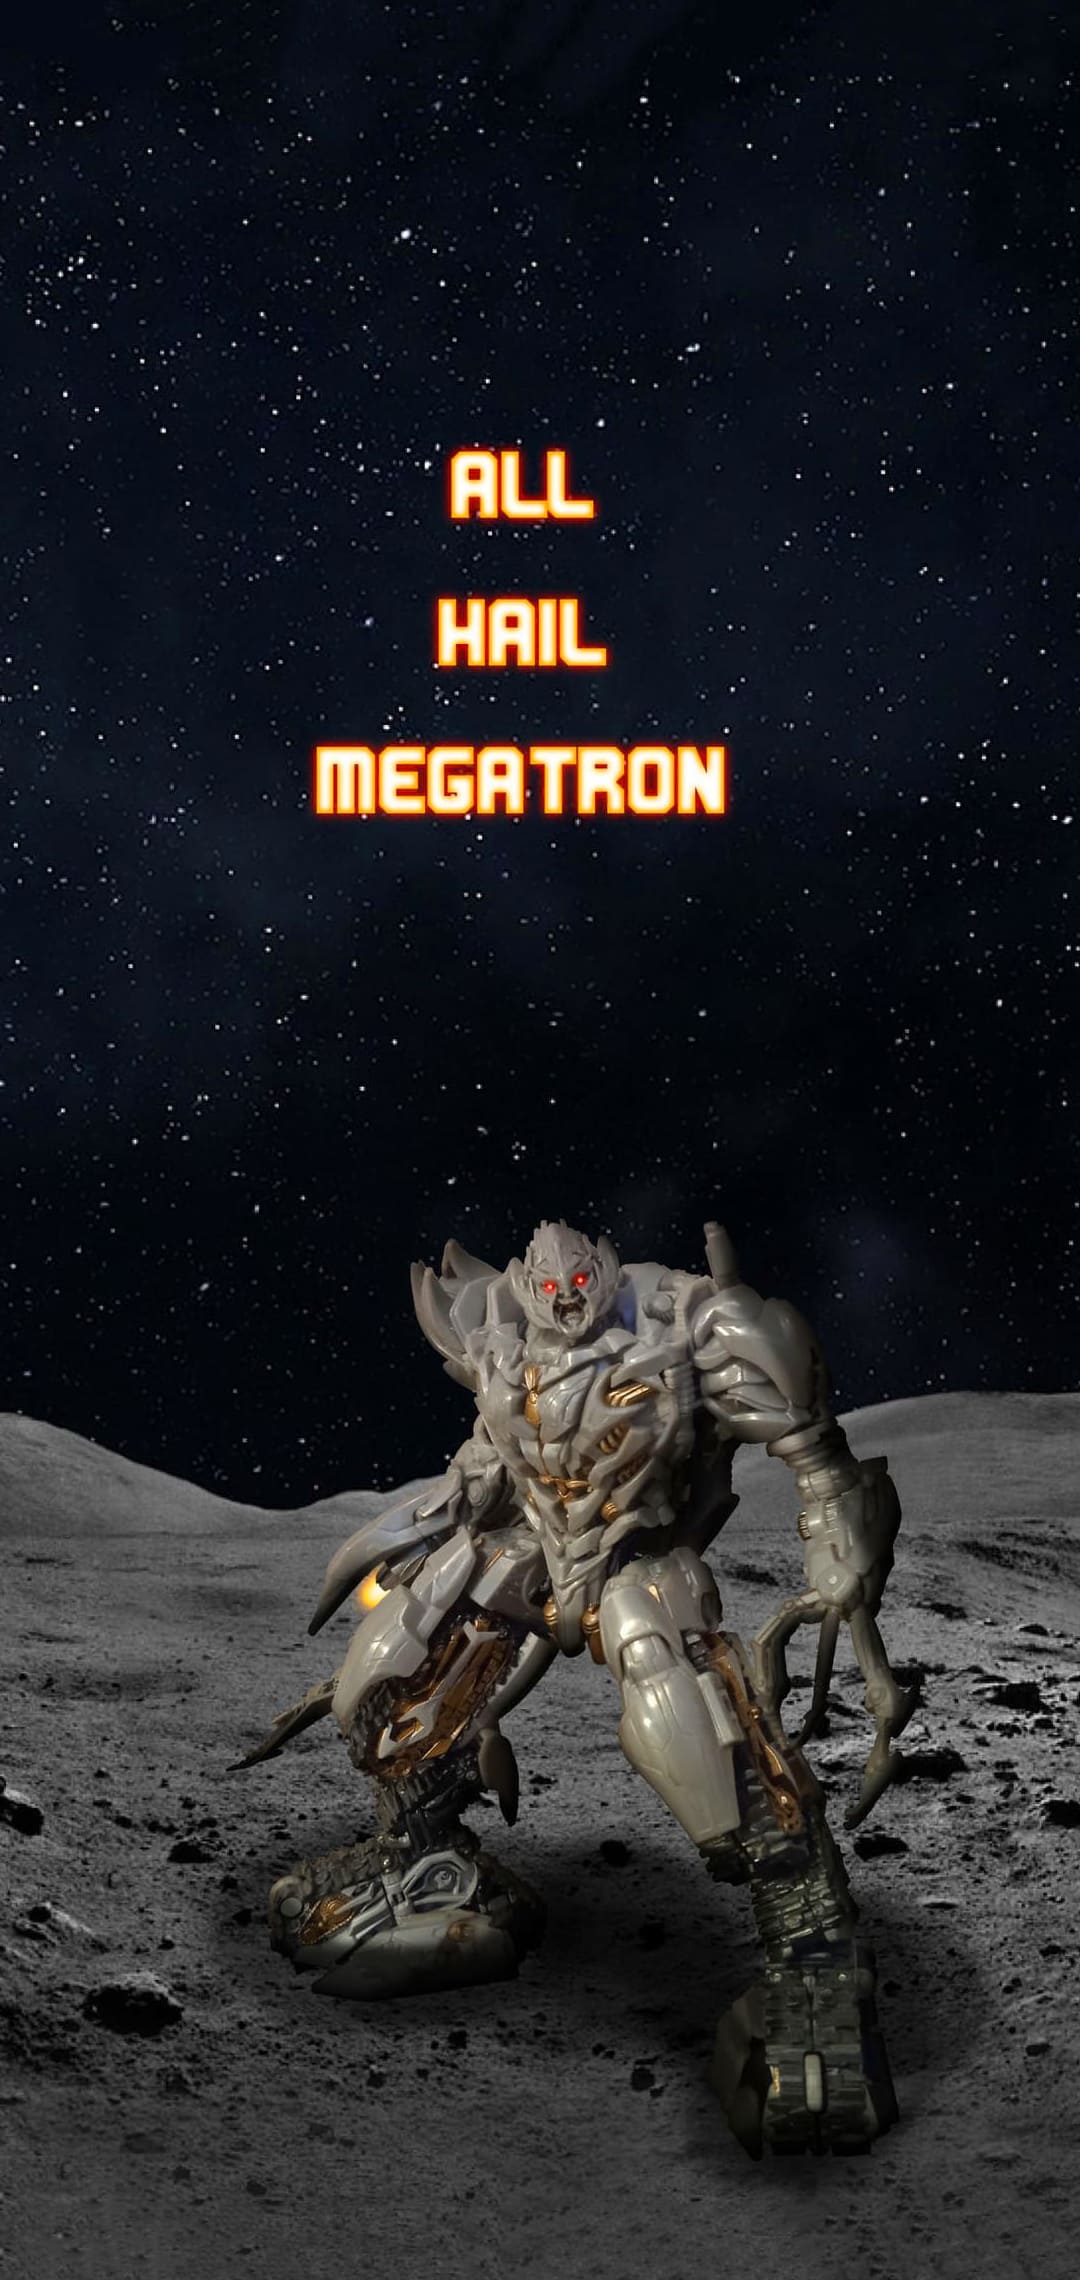 Megatron Transformers Wallpaper for iPad iPhone by tshirtGeek on DeviantArt